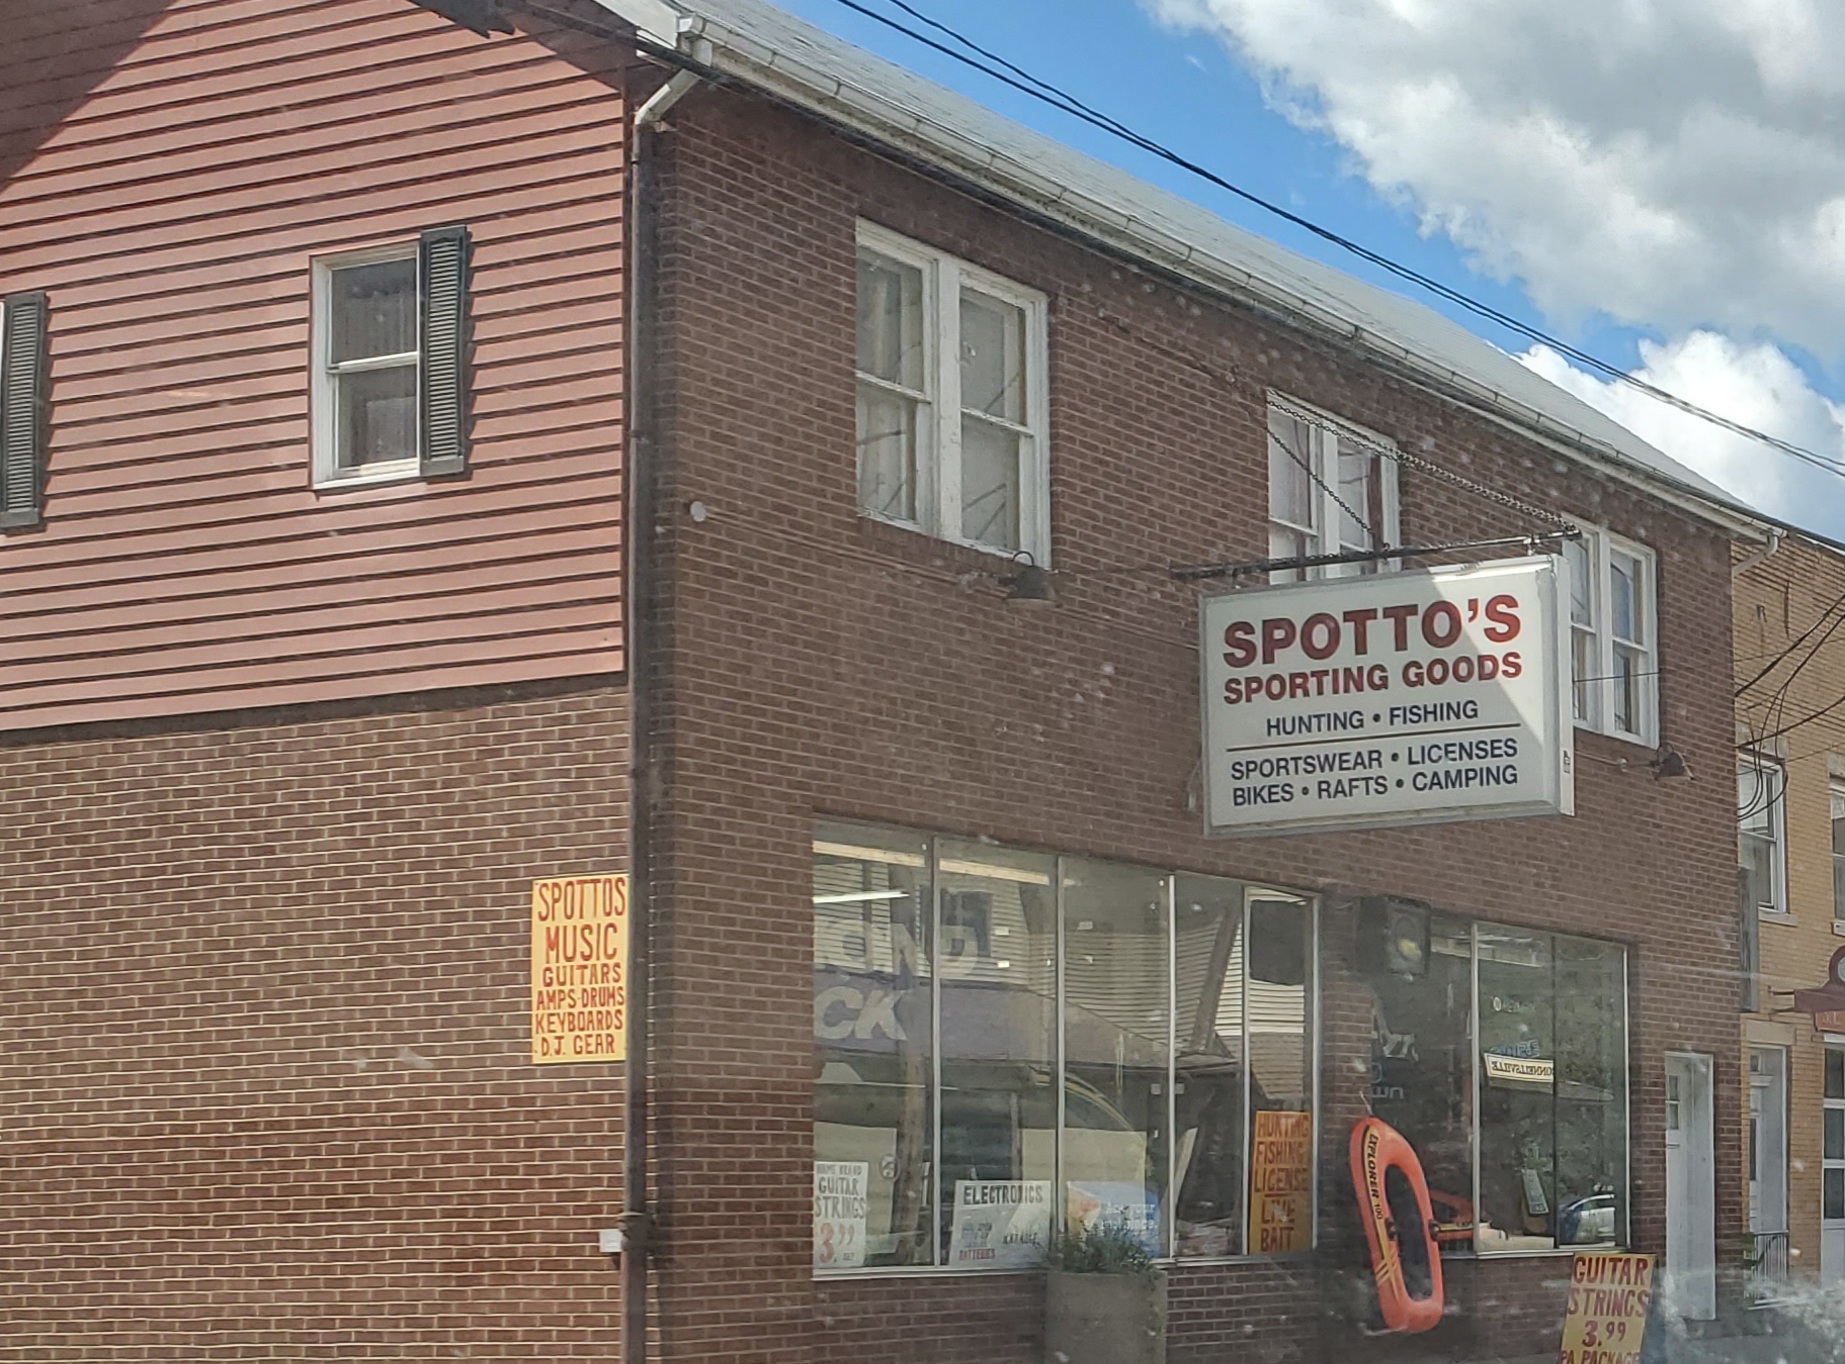 Spotto's Music 815 W Crawford Ave, Connellsville Pennsylvania 15425